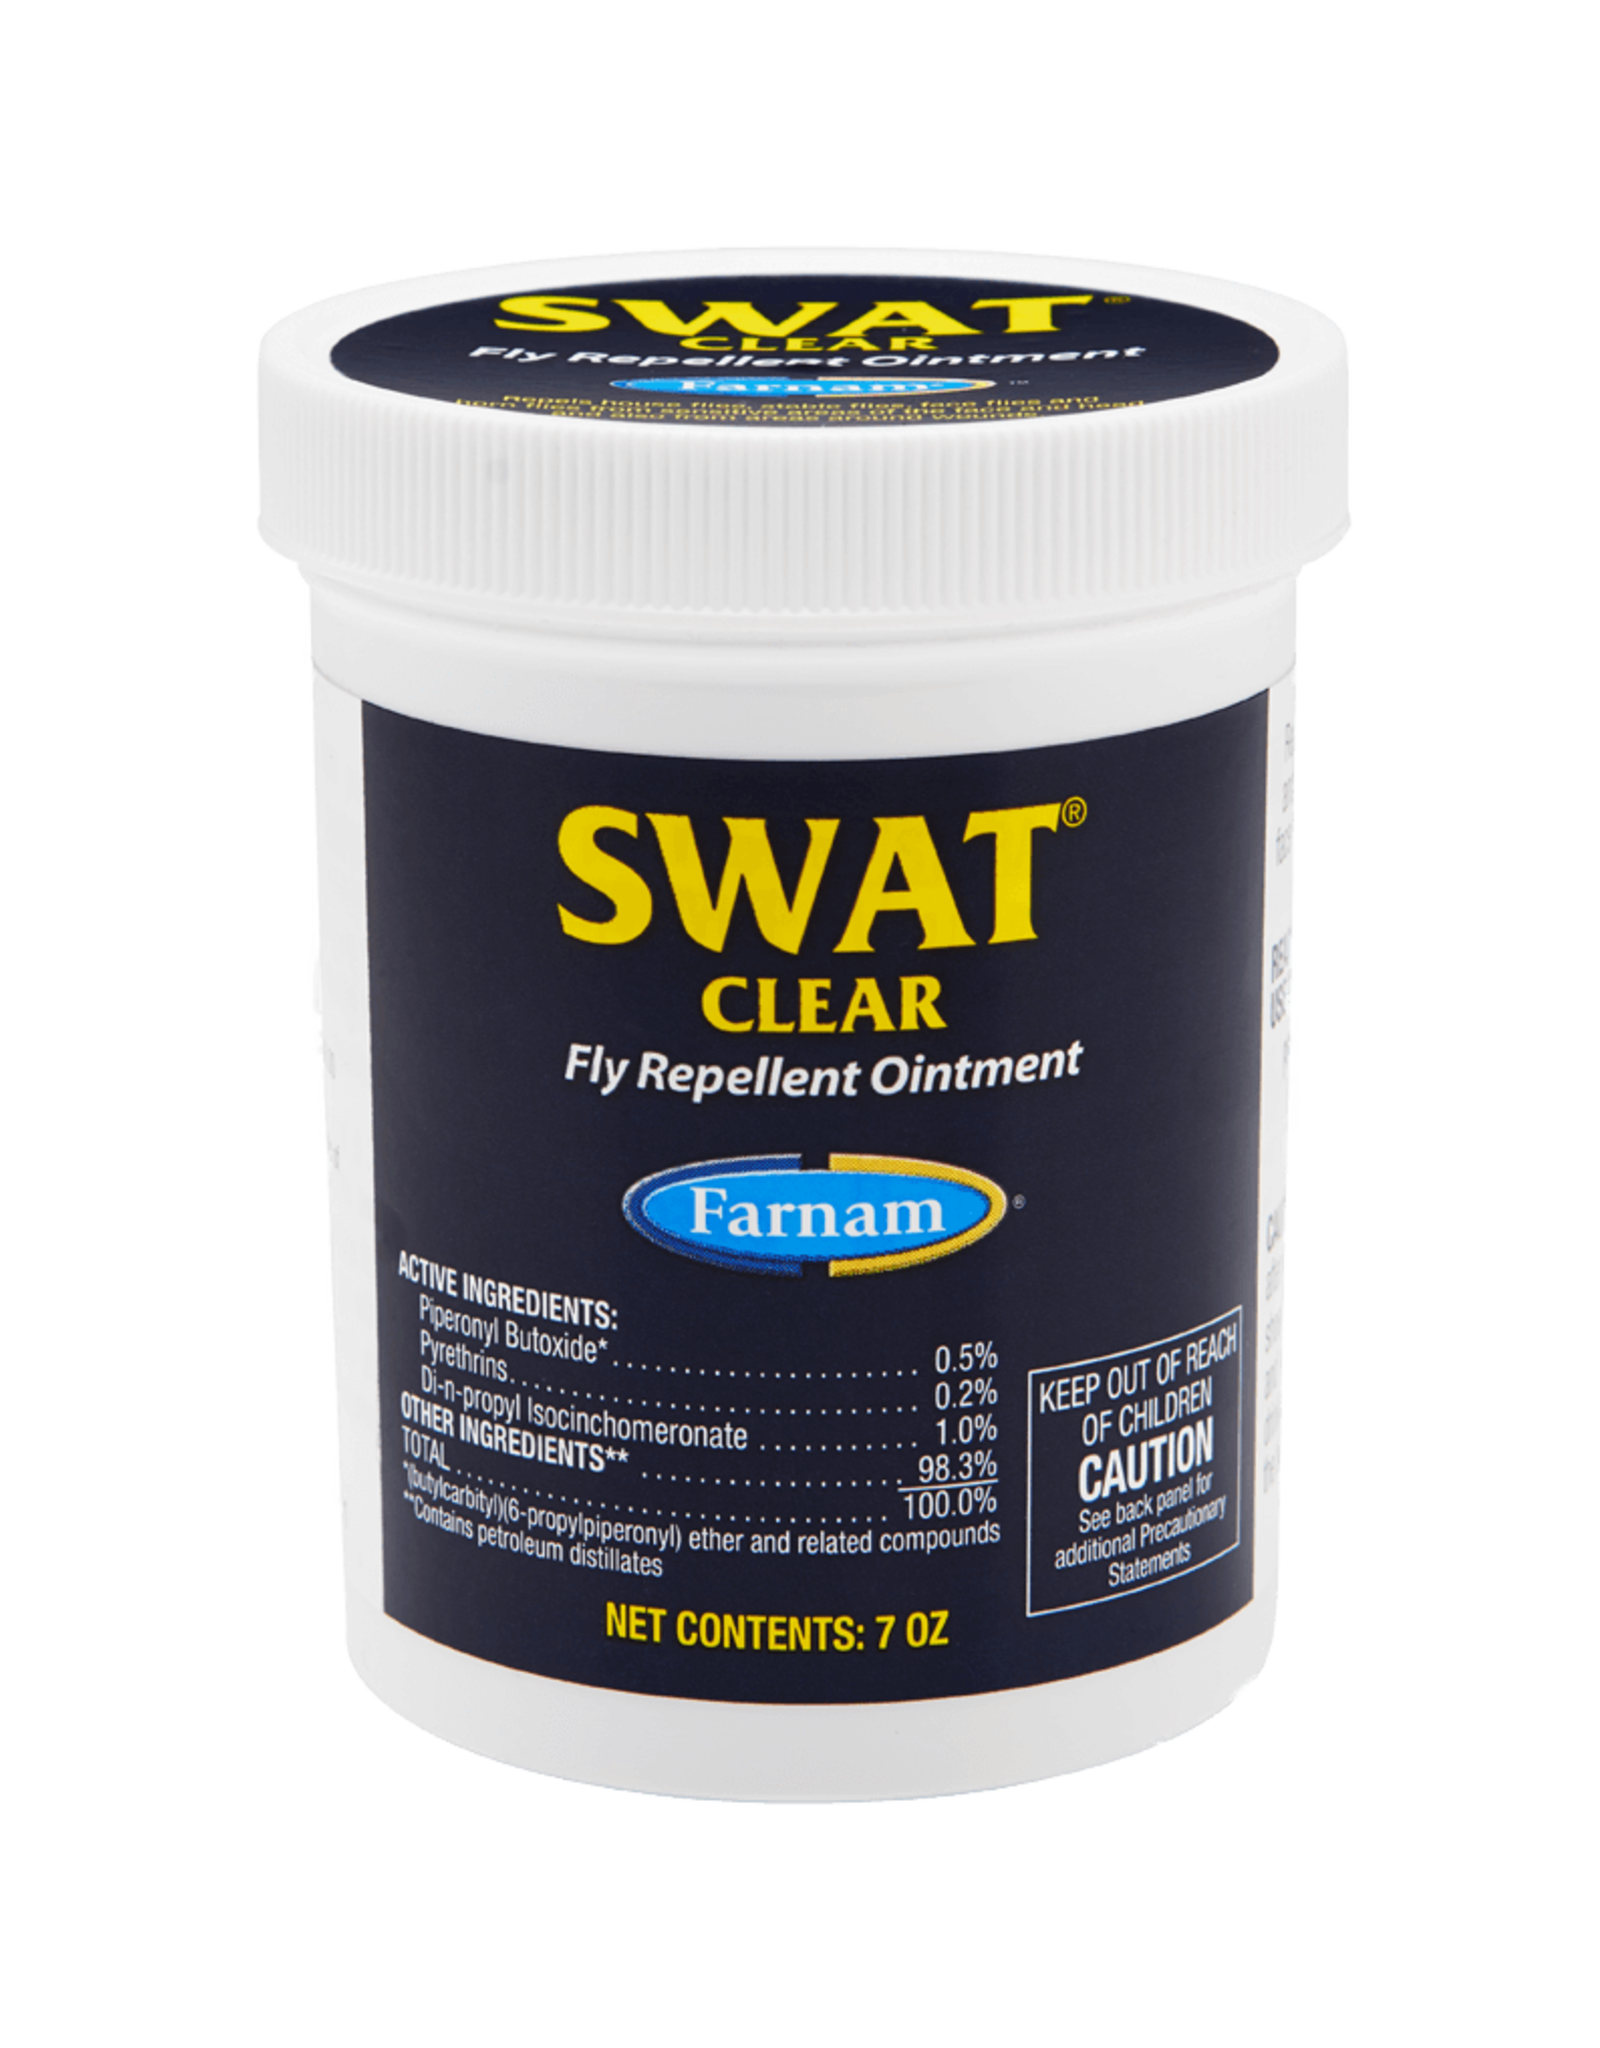 Farnam Swat Ointment Clear